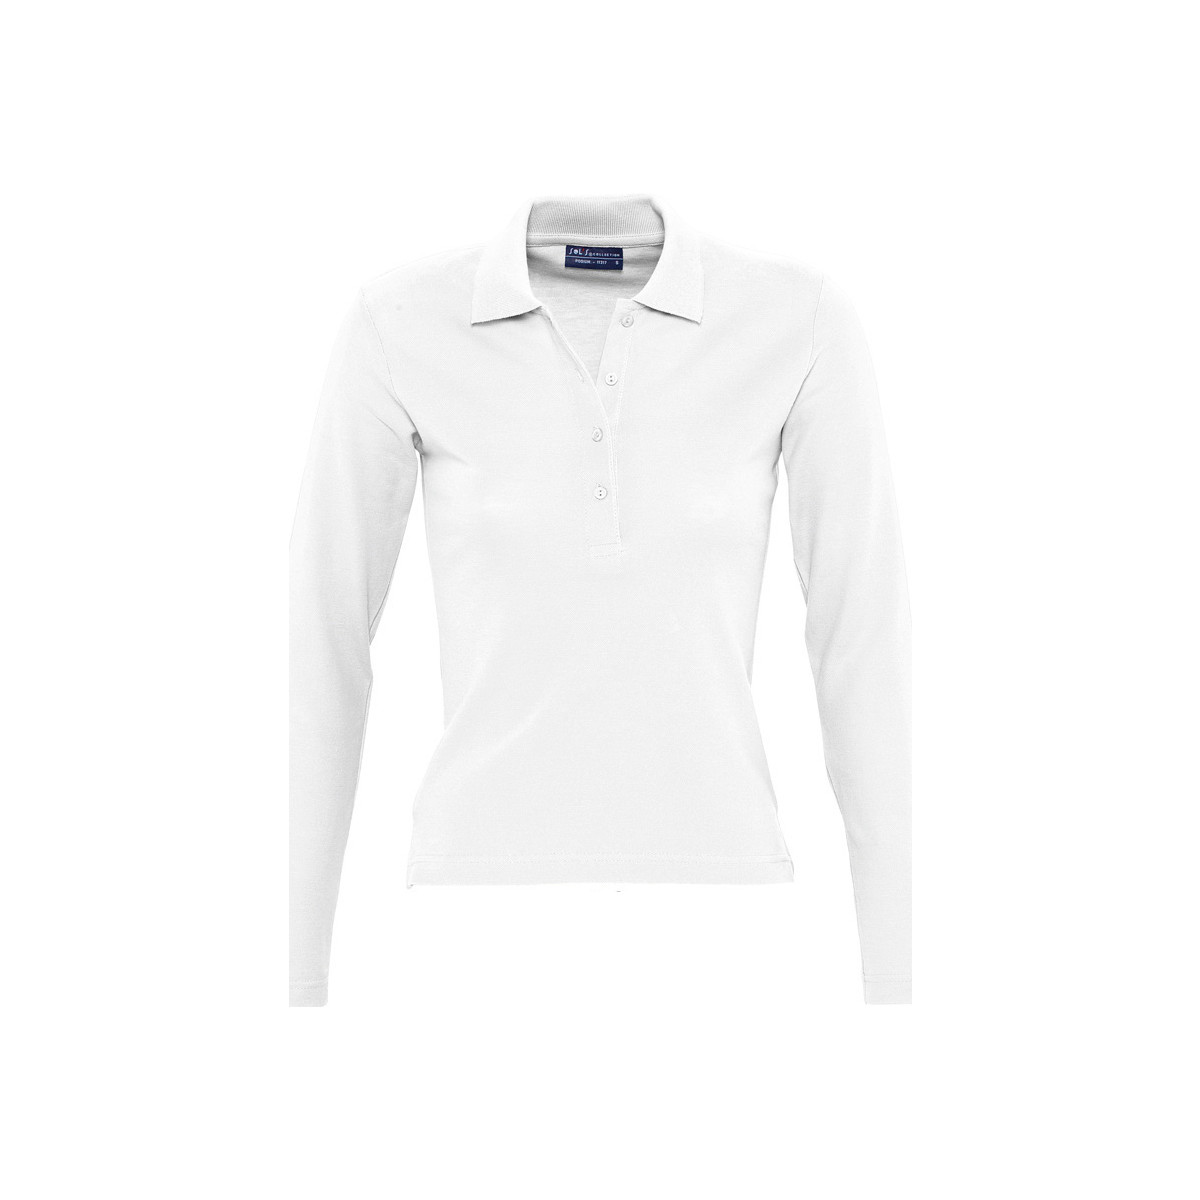 textil Dame Polo-t-shirts m. lange ærmer Sols PODIUM COLORS Hvid